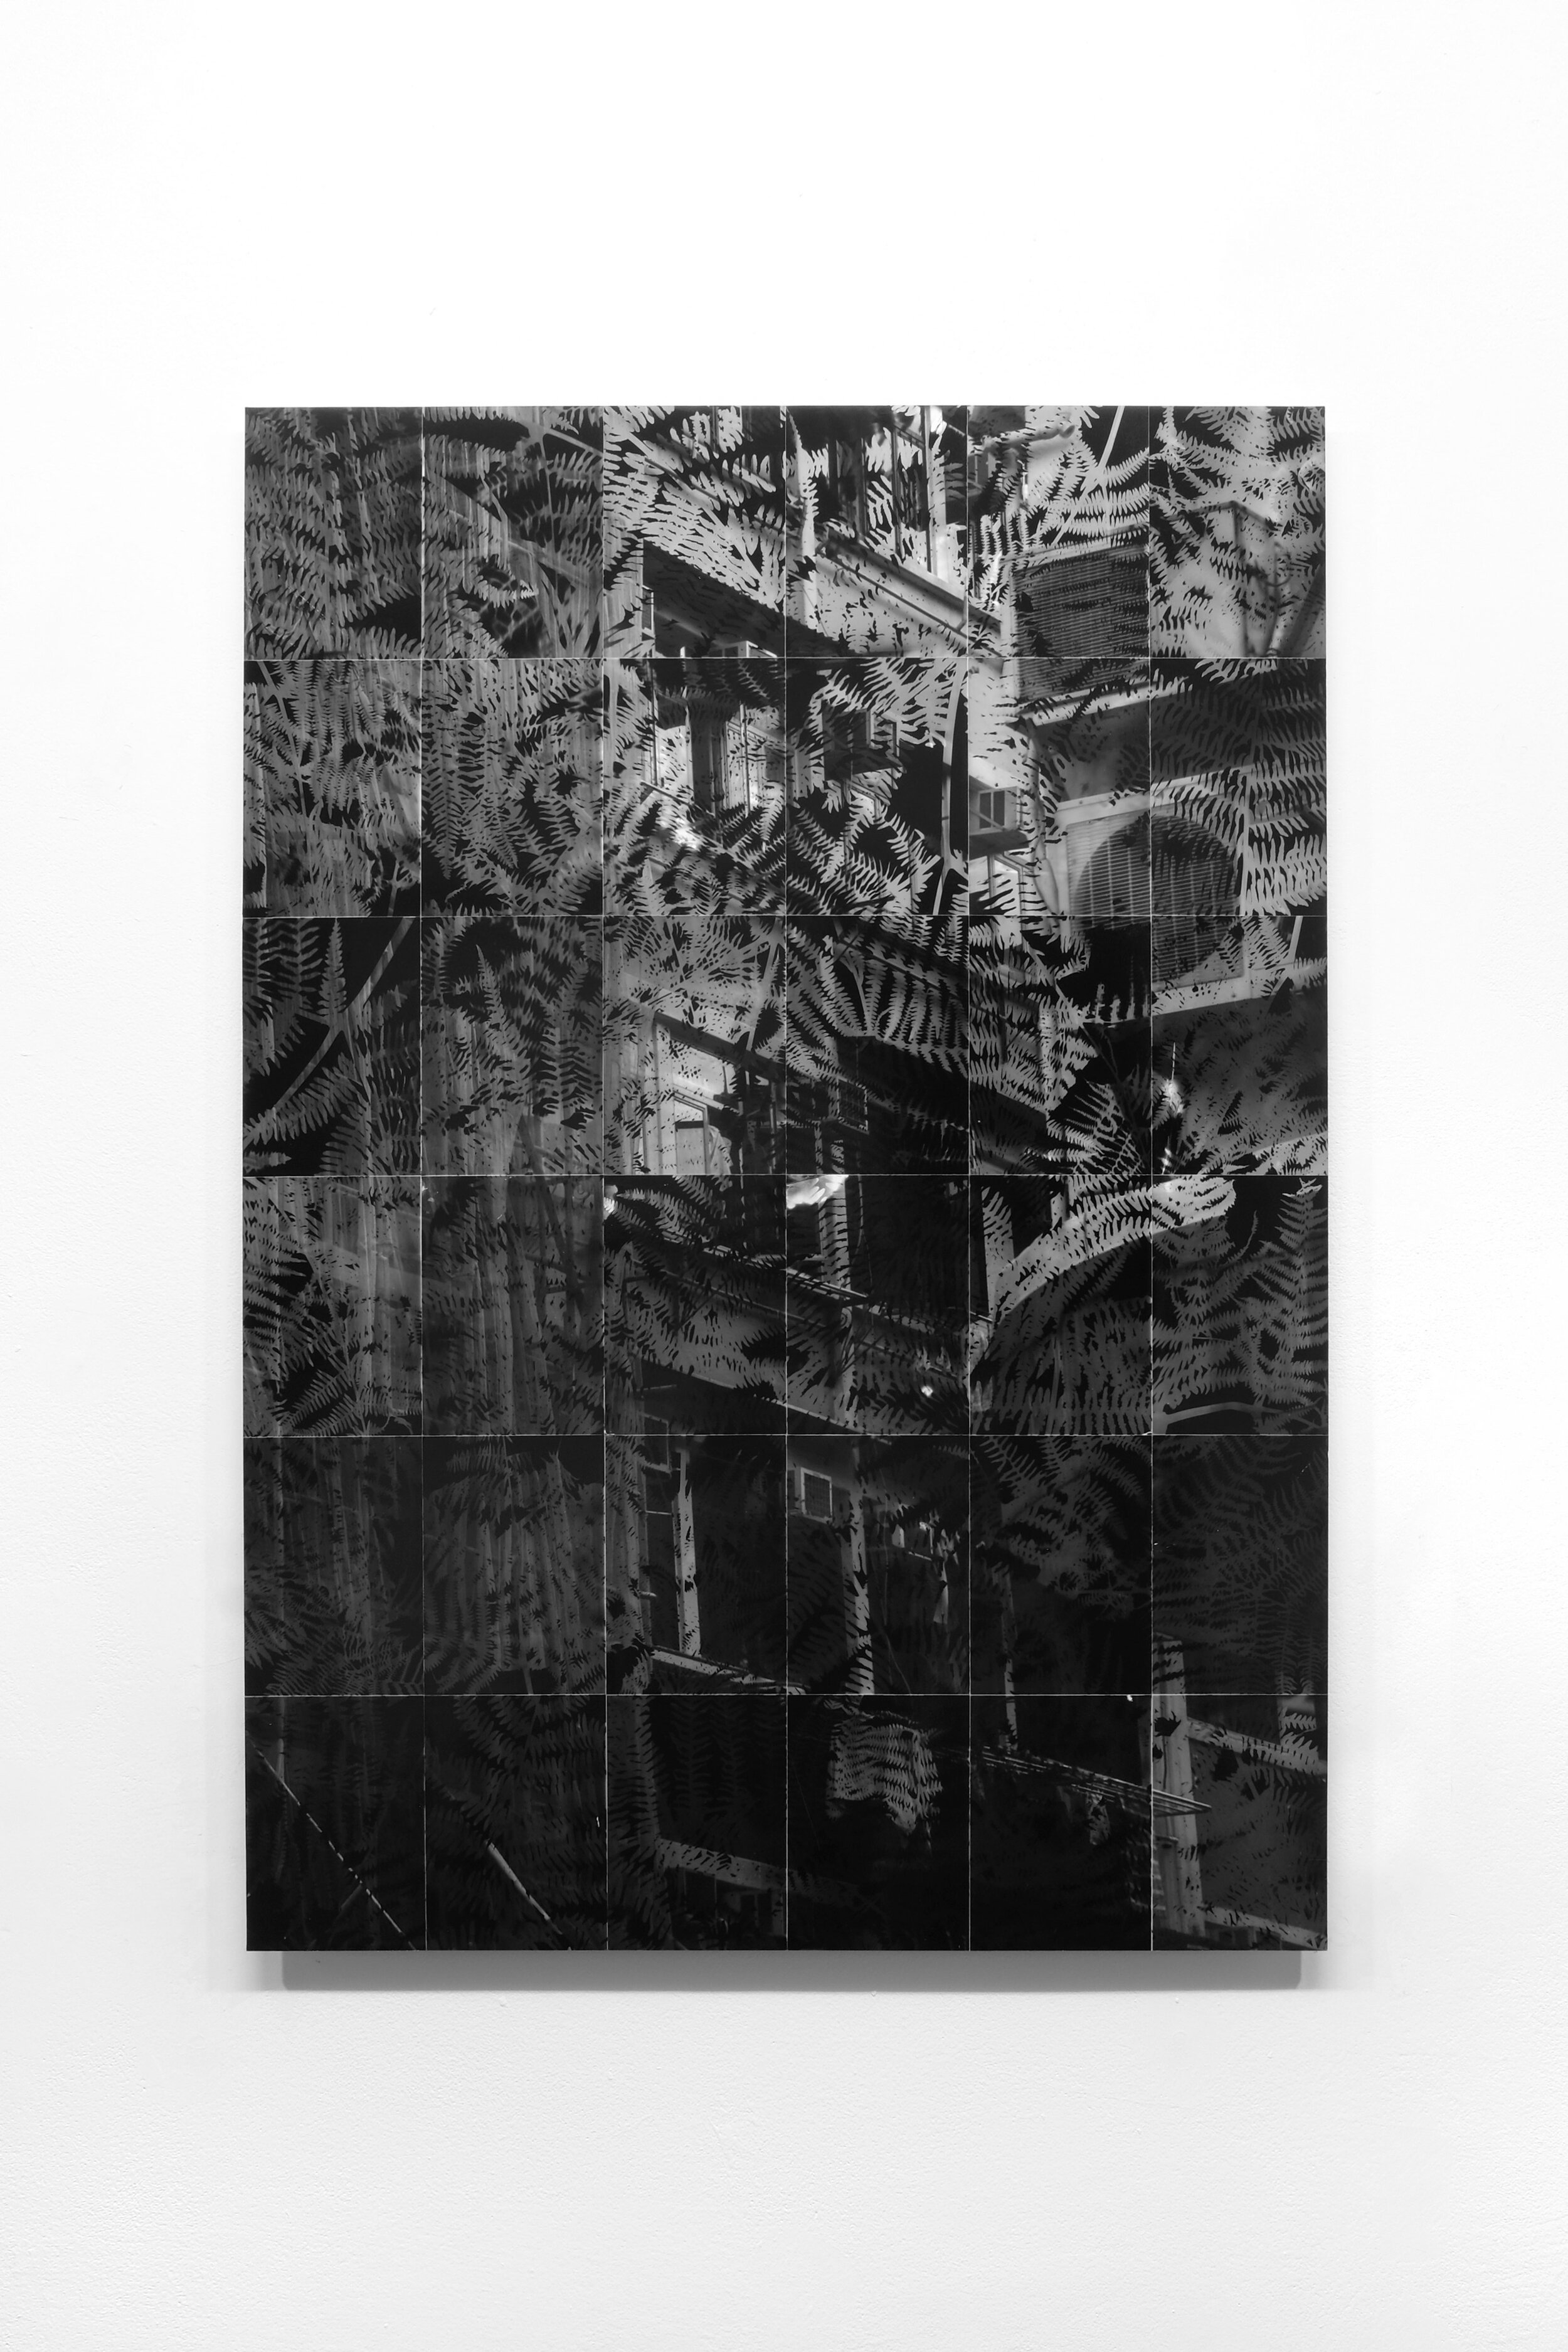   Undergrowth/Overgrowth , 2018, 88.5×62.5cm, 36 silver gelatine prints (RC gloss) on aluminium 